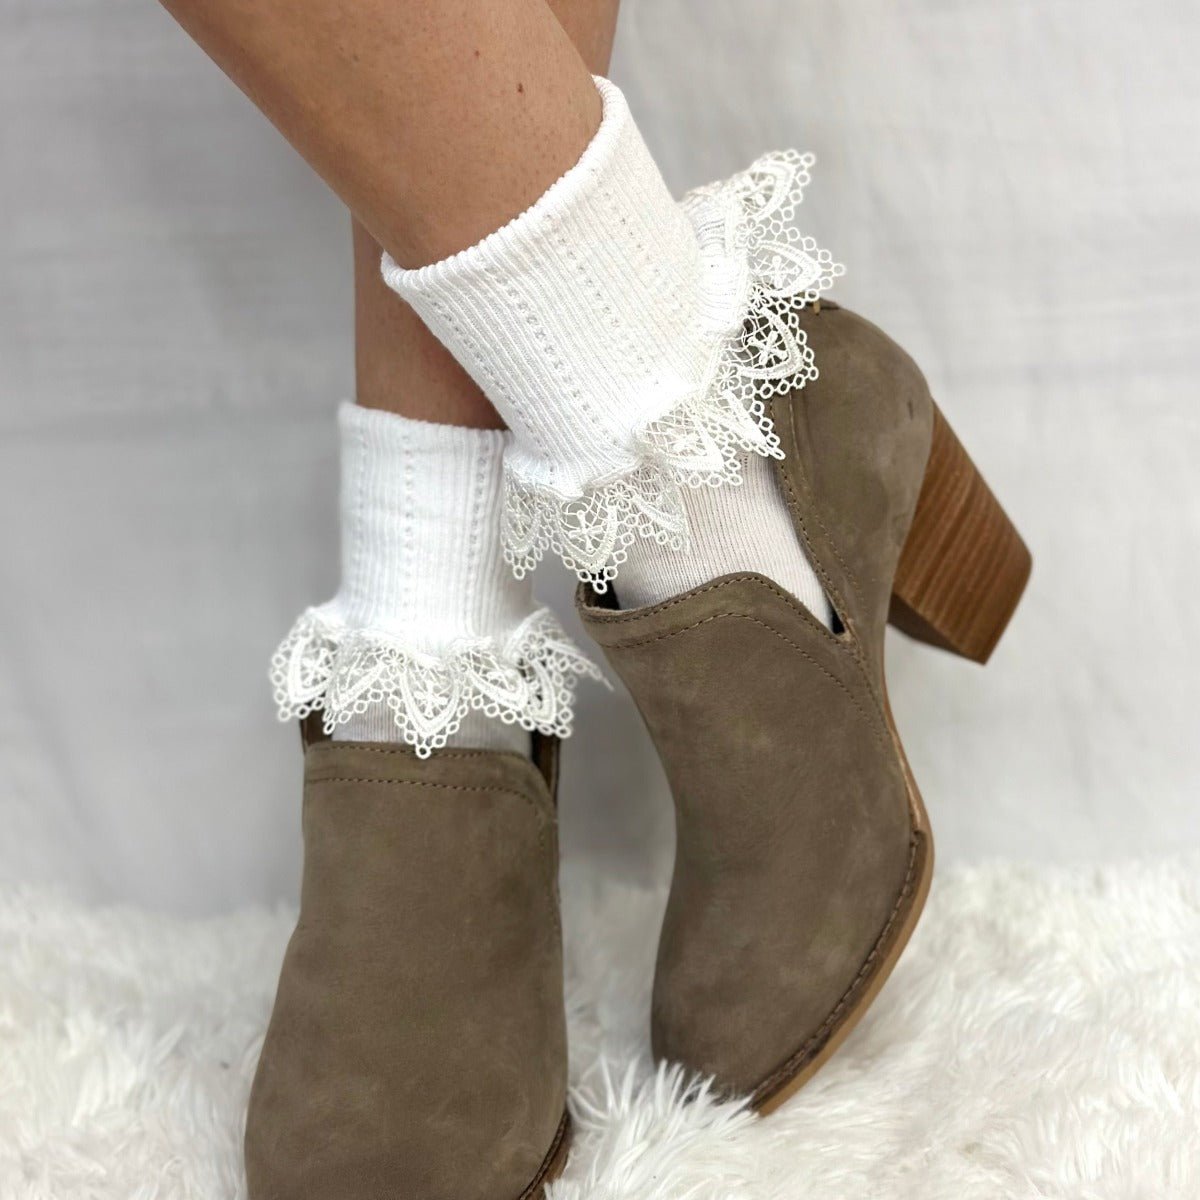 SALE lace cuff cotton socks white  cute ruffle trimmed socks women –  Catherine Cole